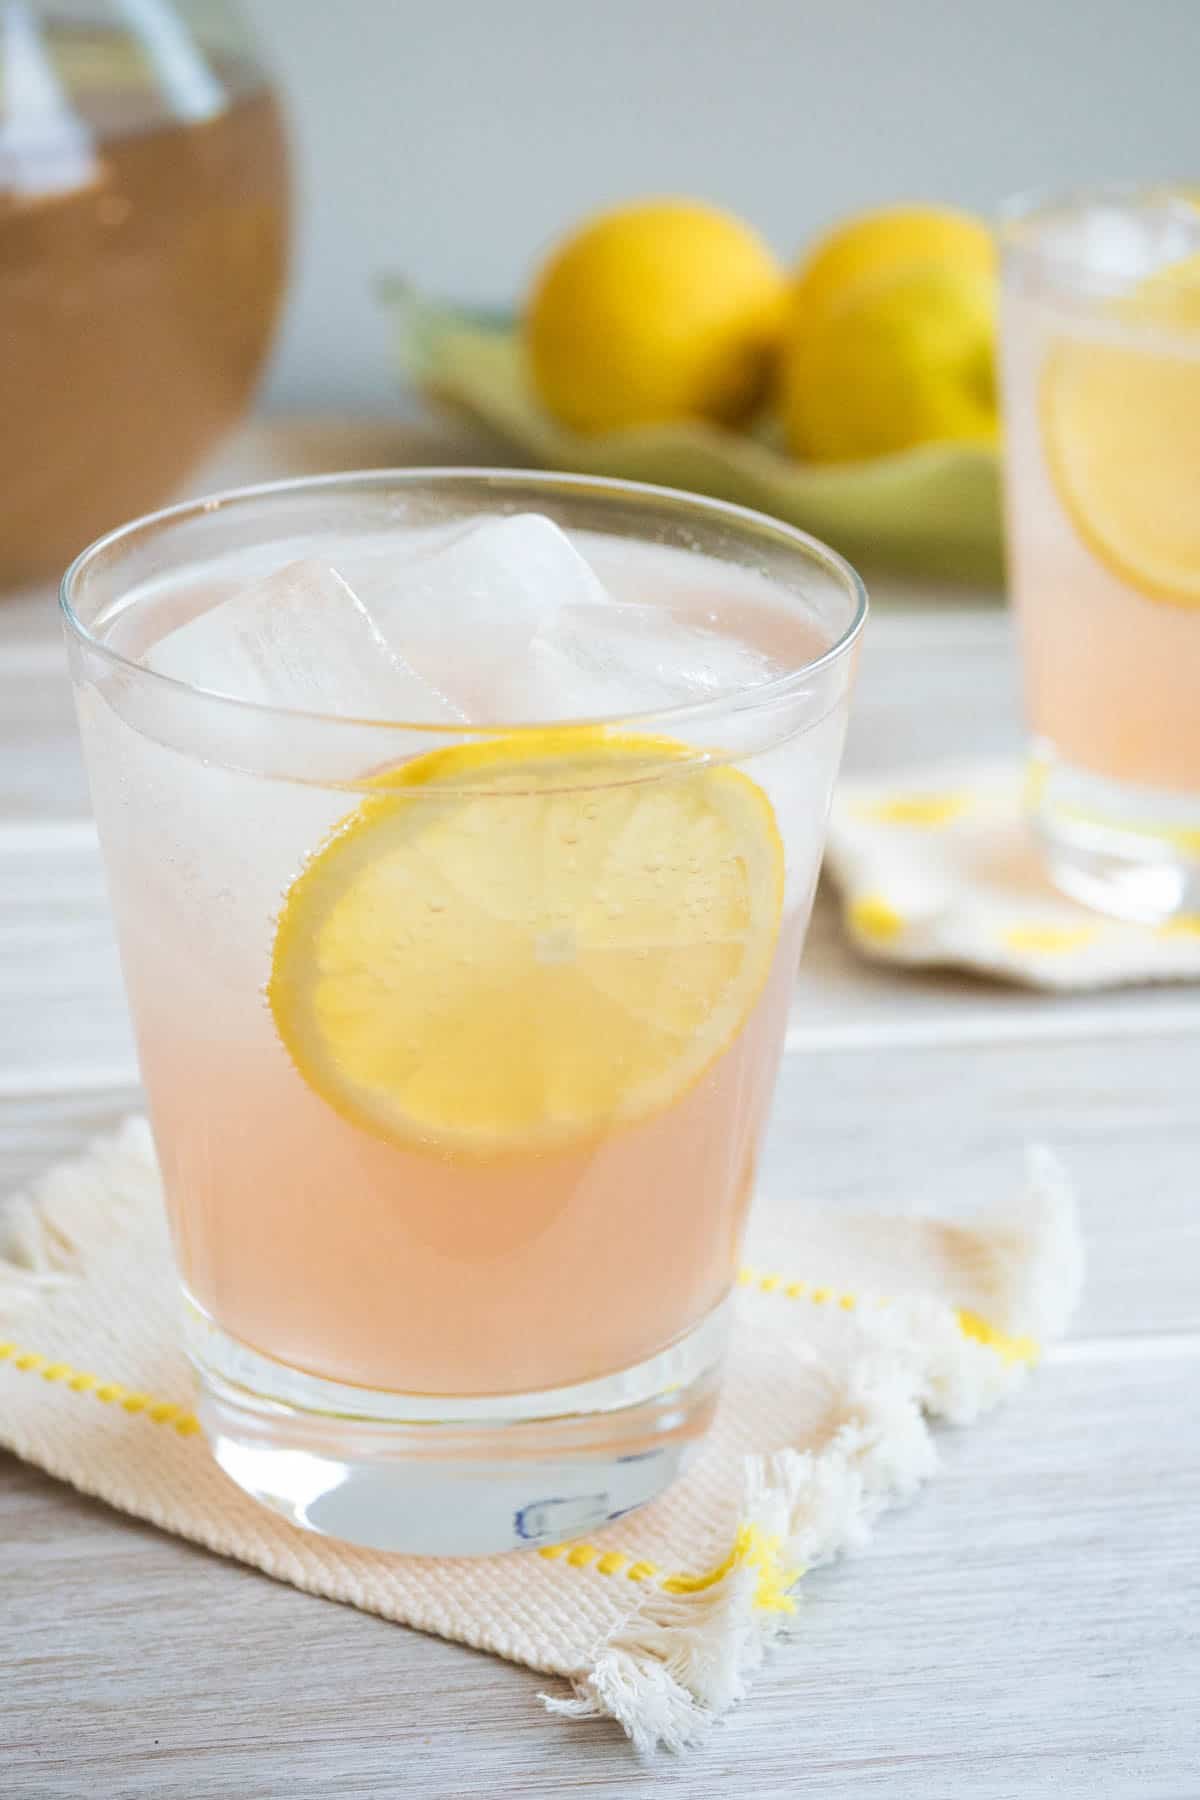 a glass of rose lemonade on a coaster, garnished with a lemon wheel.